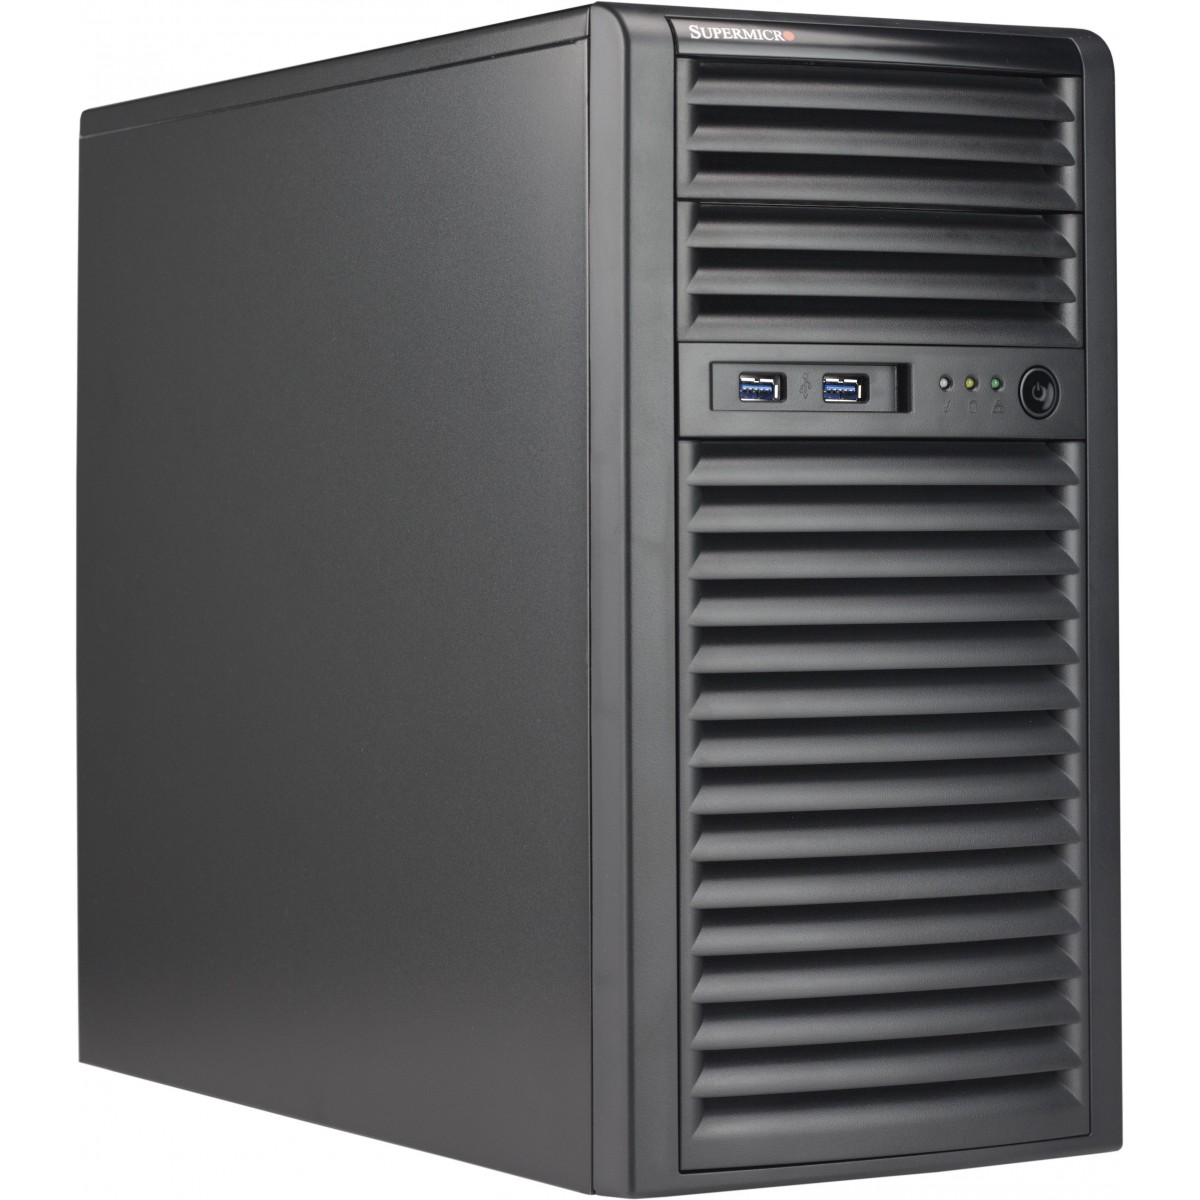 Supermicro CSE-731I-404B - Mini Tower - Server - Black - micro ATX - HDD - Network - Power - System - Kensington